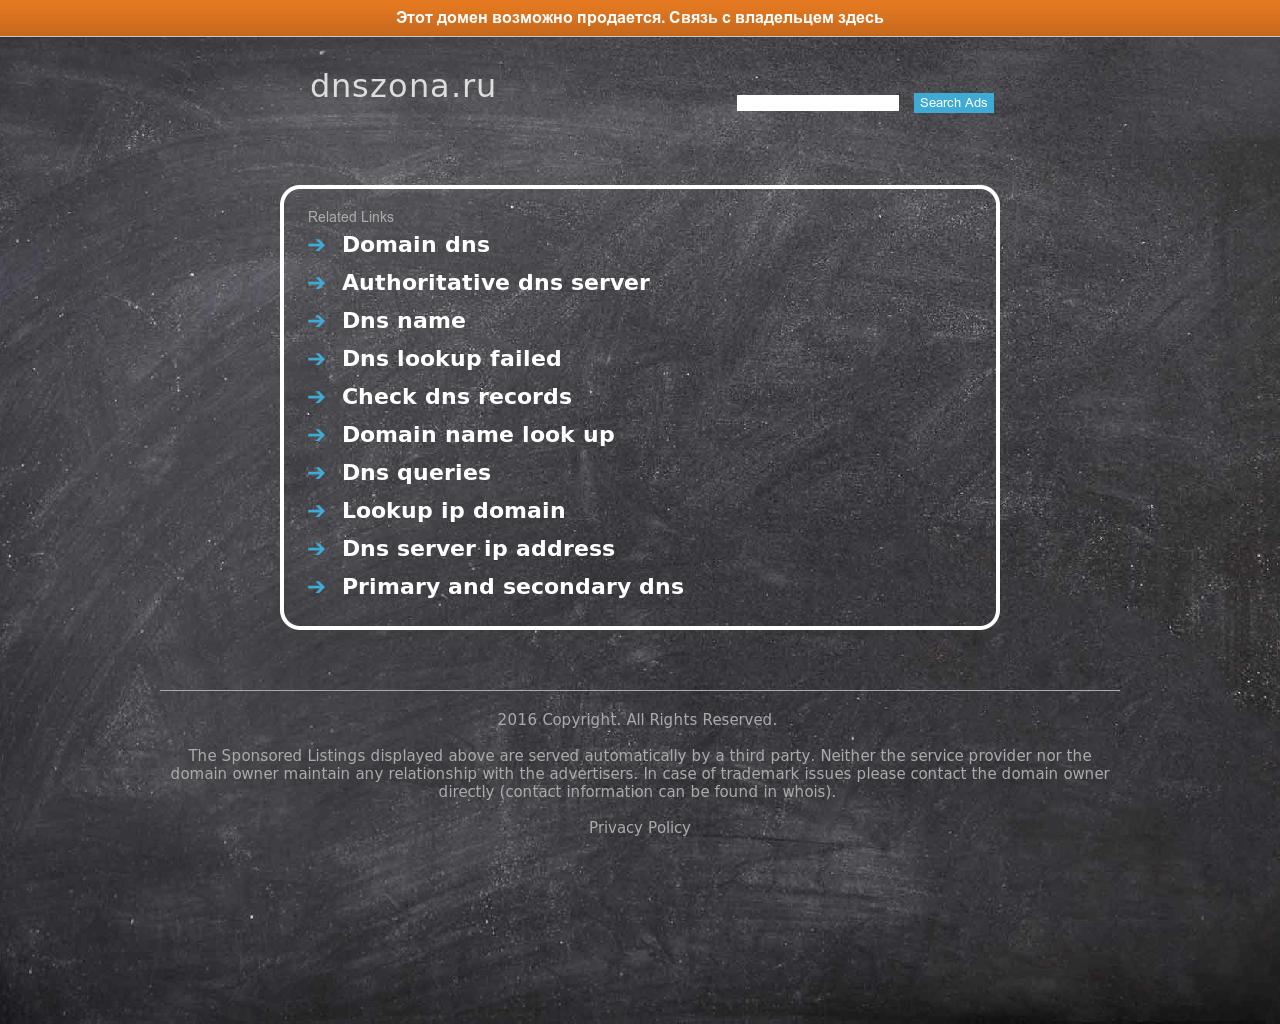 Изображение сайта dnszona.ru в разрешении 1280x1024